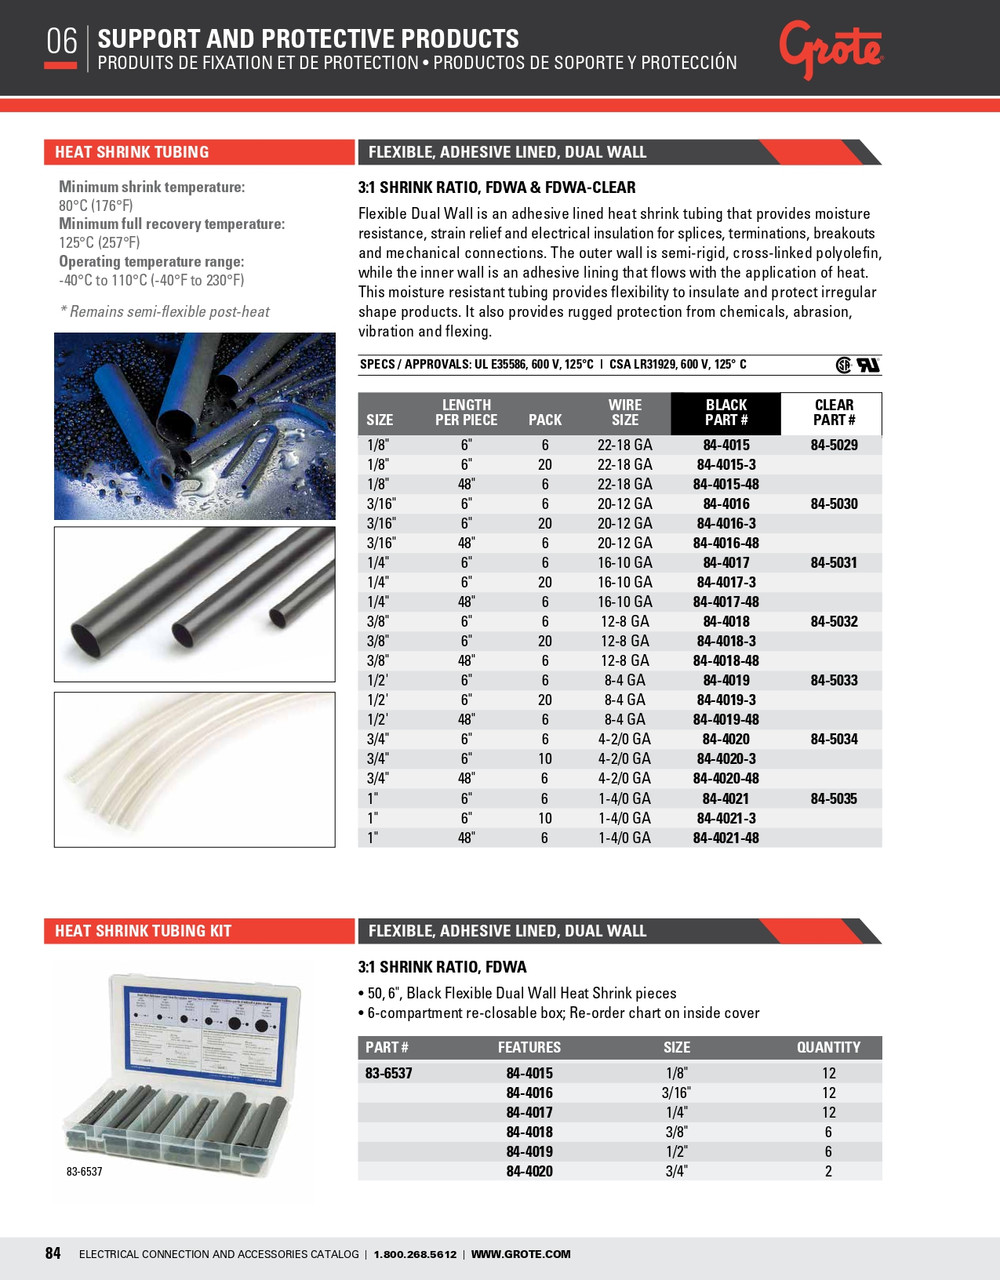 1/4" Dual Wall 3:1 Flexible Adhesive Lined Heat Shrink Tubing 48" @ 6 Pack - Black  84-4017-48